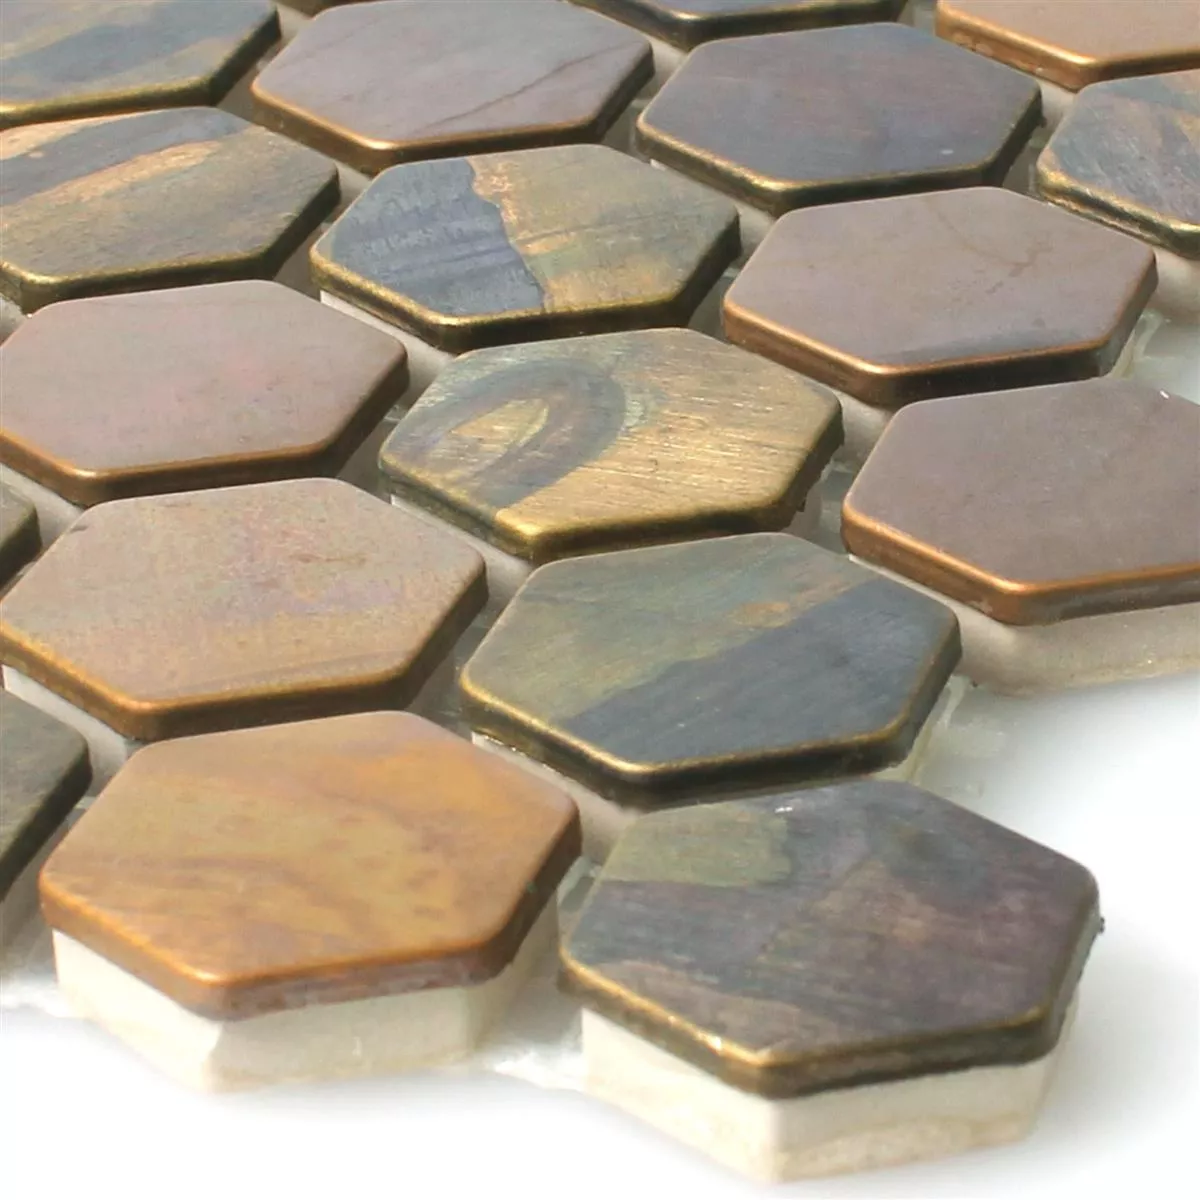 Mosaic Tiles Copper Merkur Hexagon Brown 24